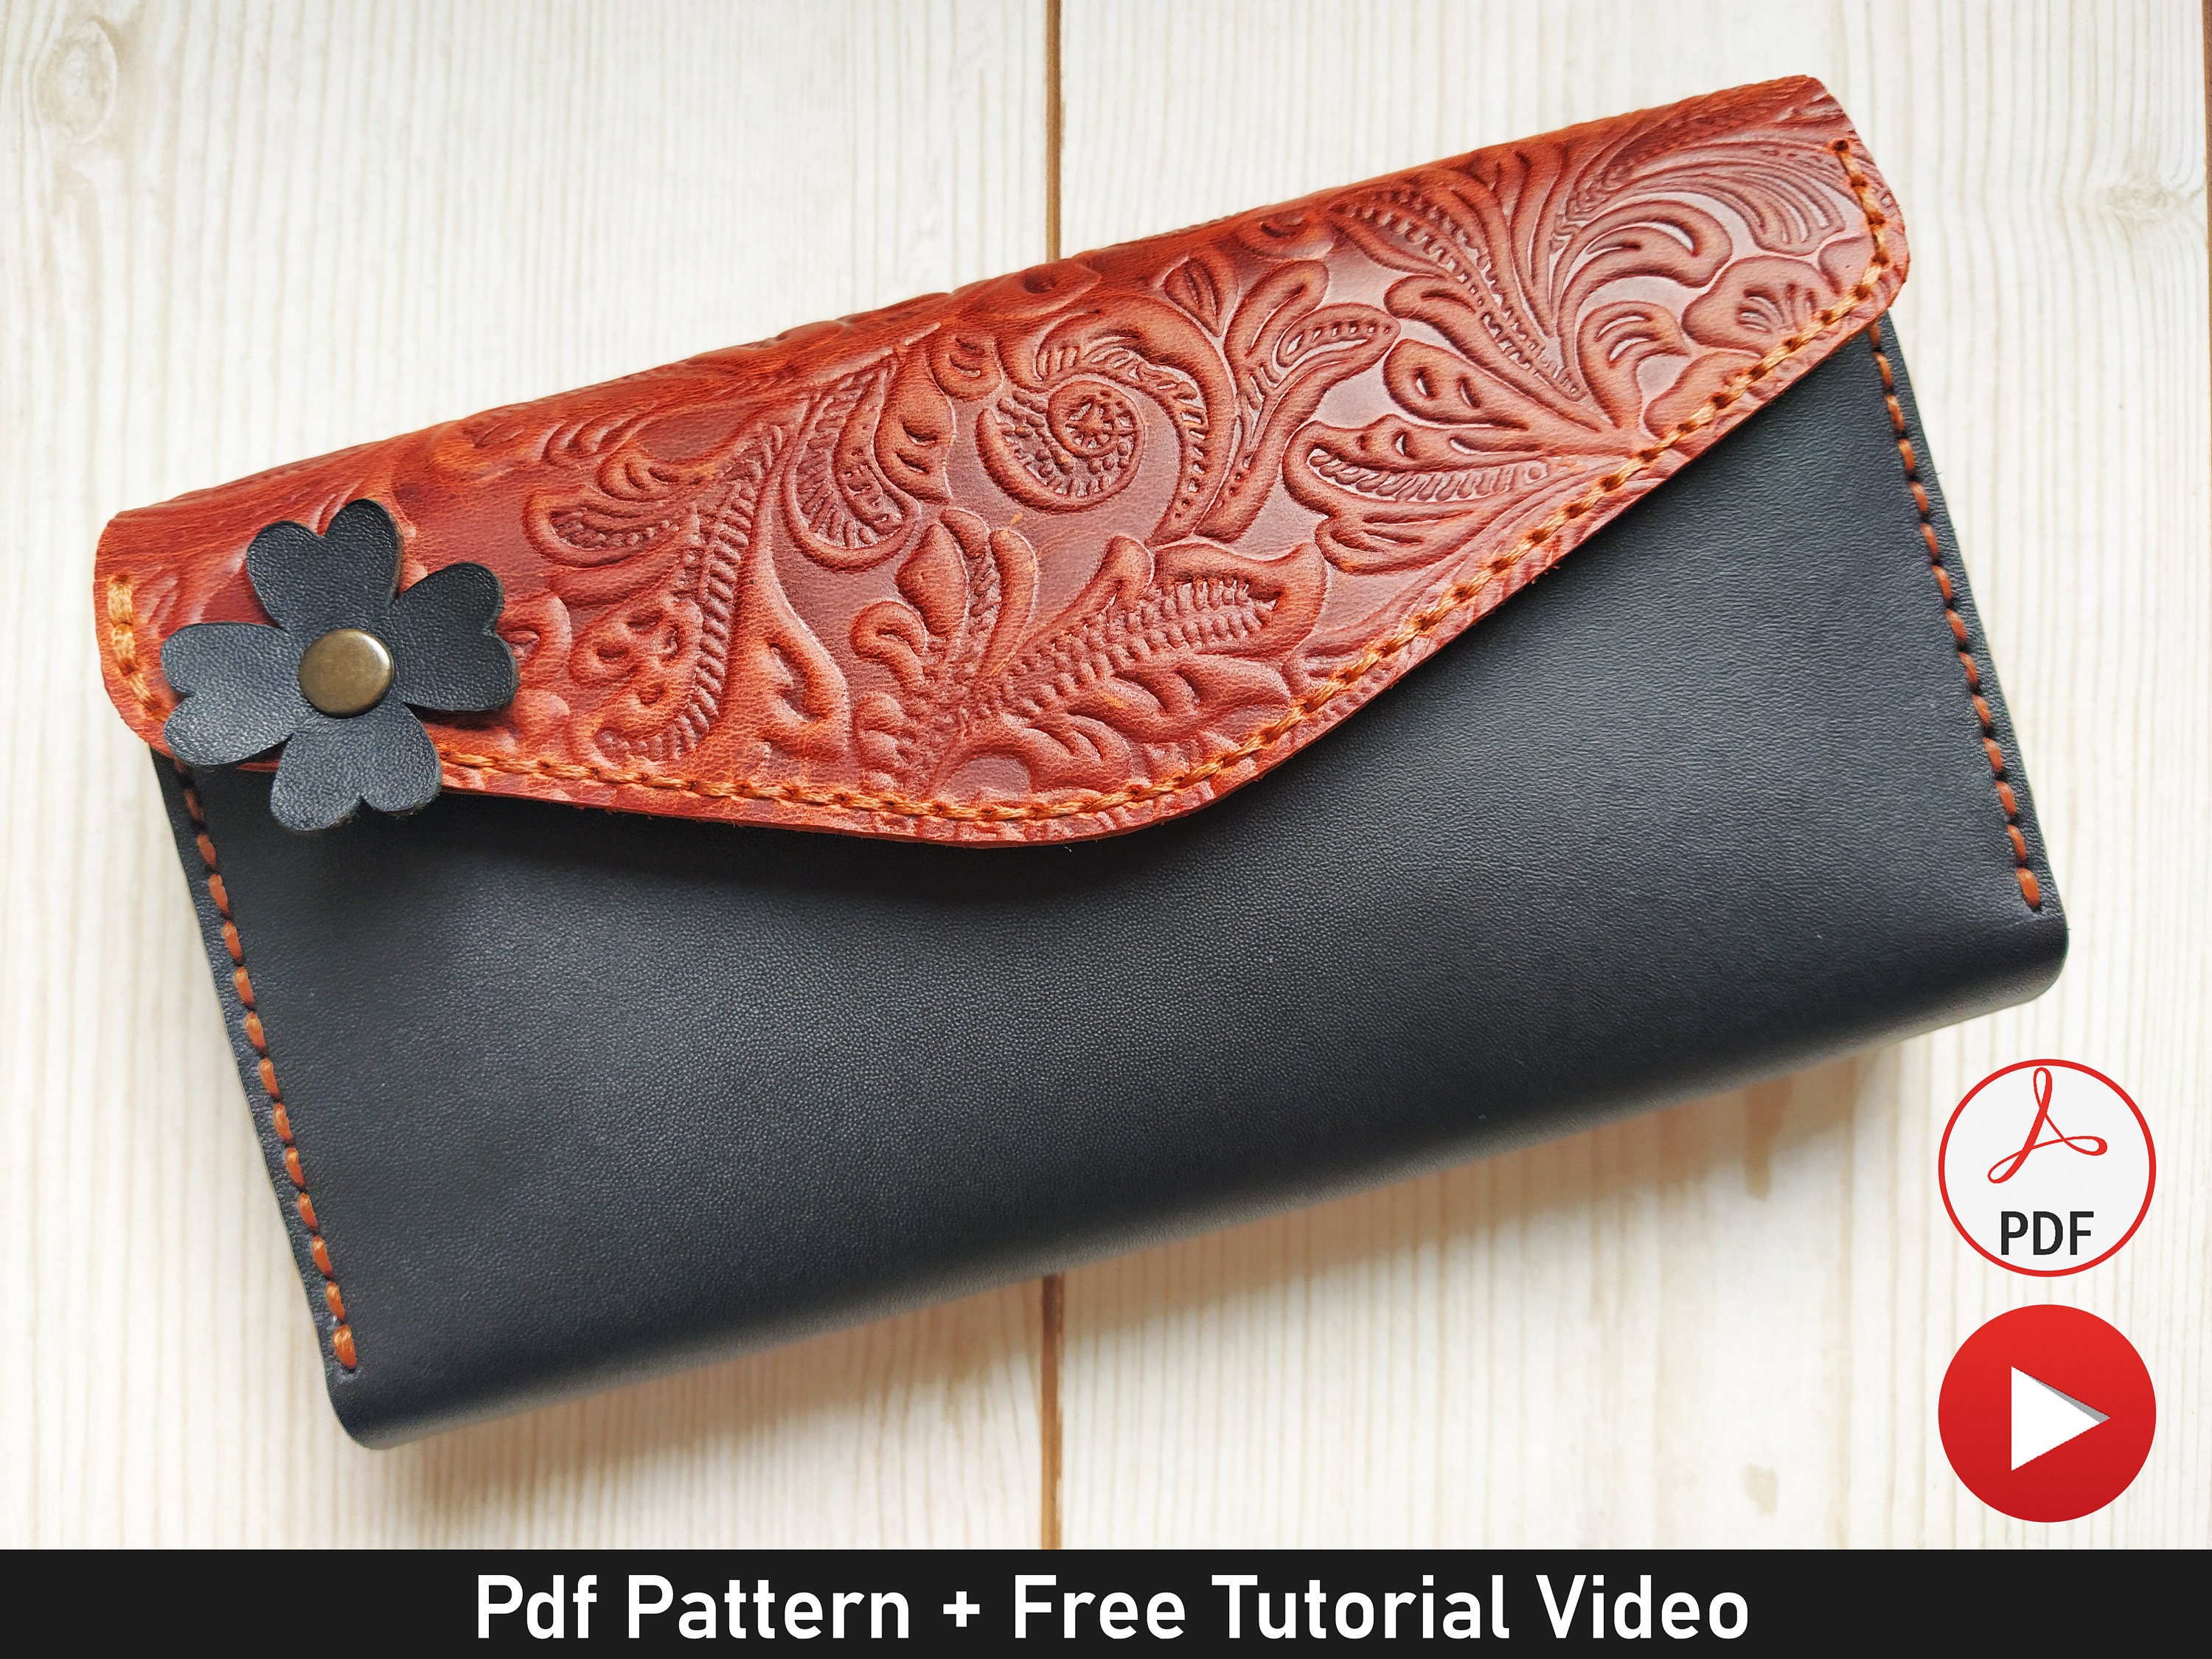 FREE PDF Leather Patterns! 